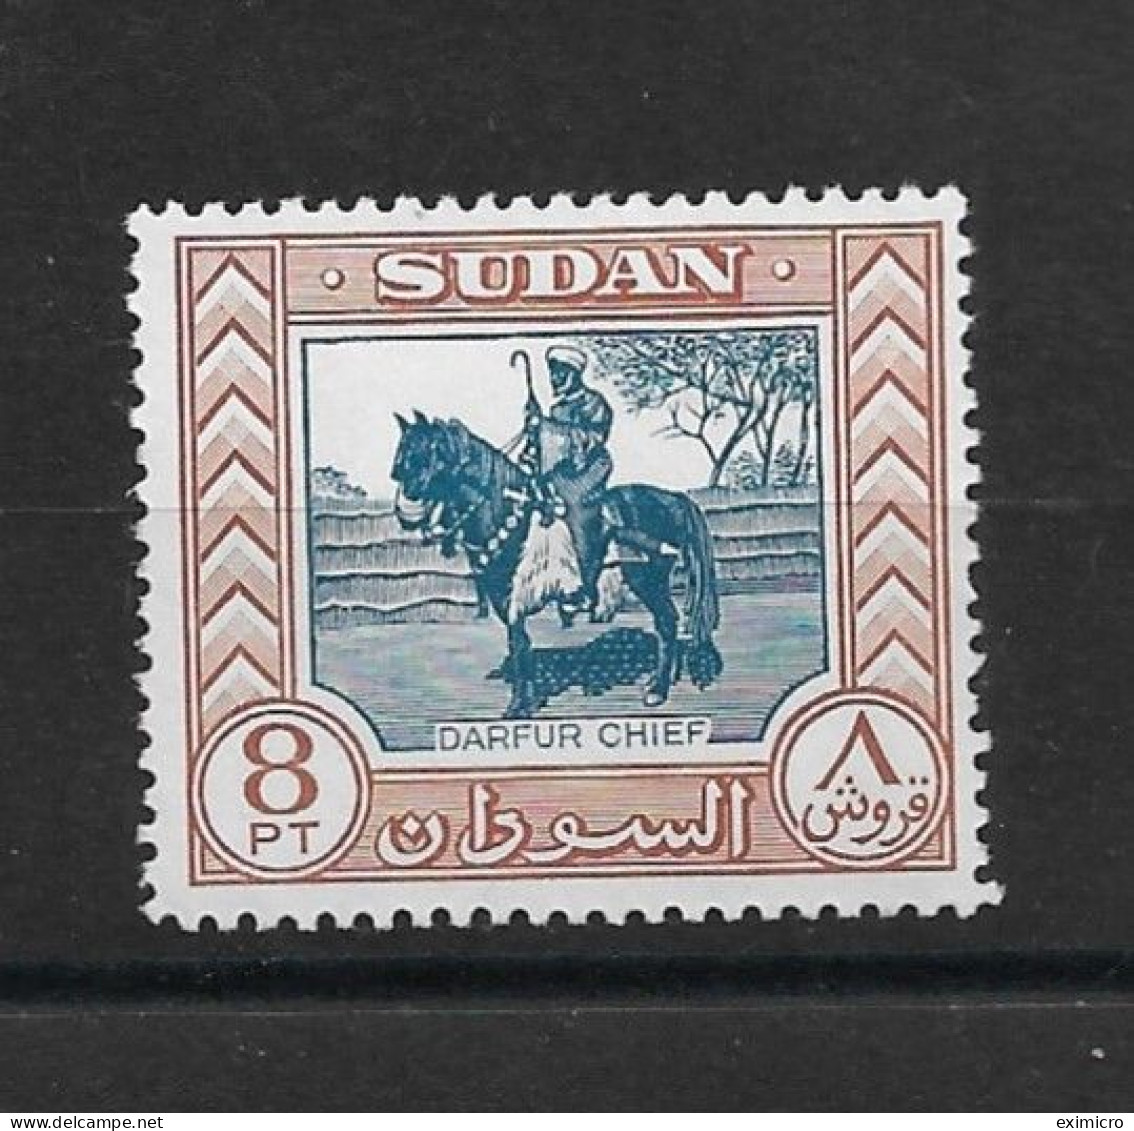 SUDAN 1951 - 1961 8p  SG 136a DEEP BLUE AND BROWN  UNMOUNTED MINT Cat £21 - Soedan (...-1951)